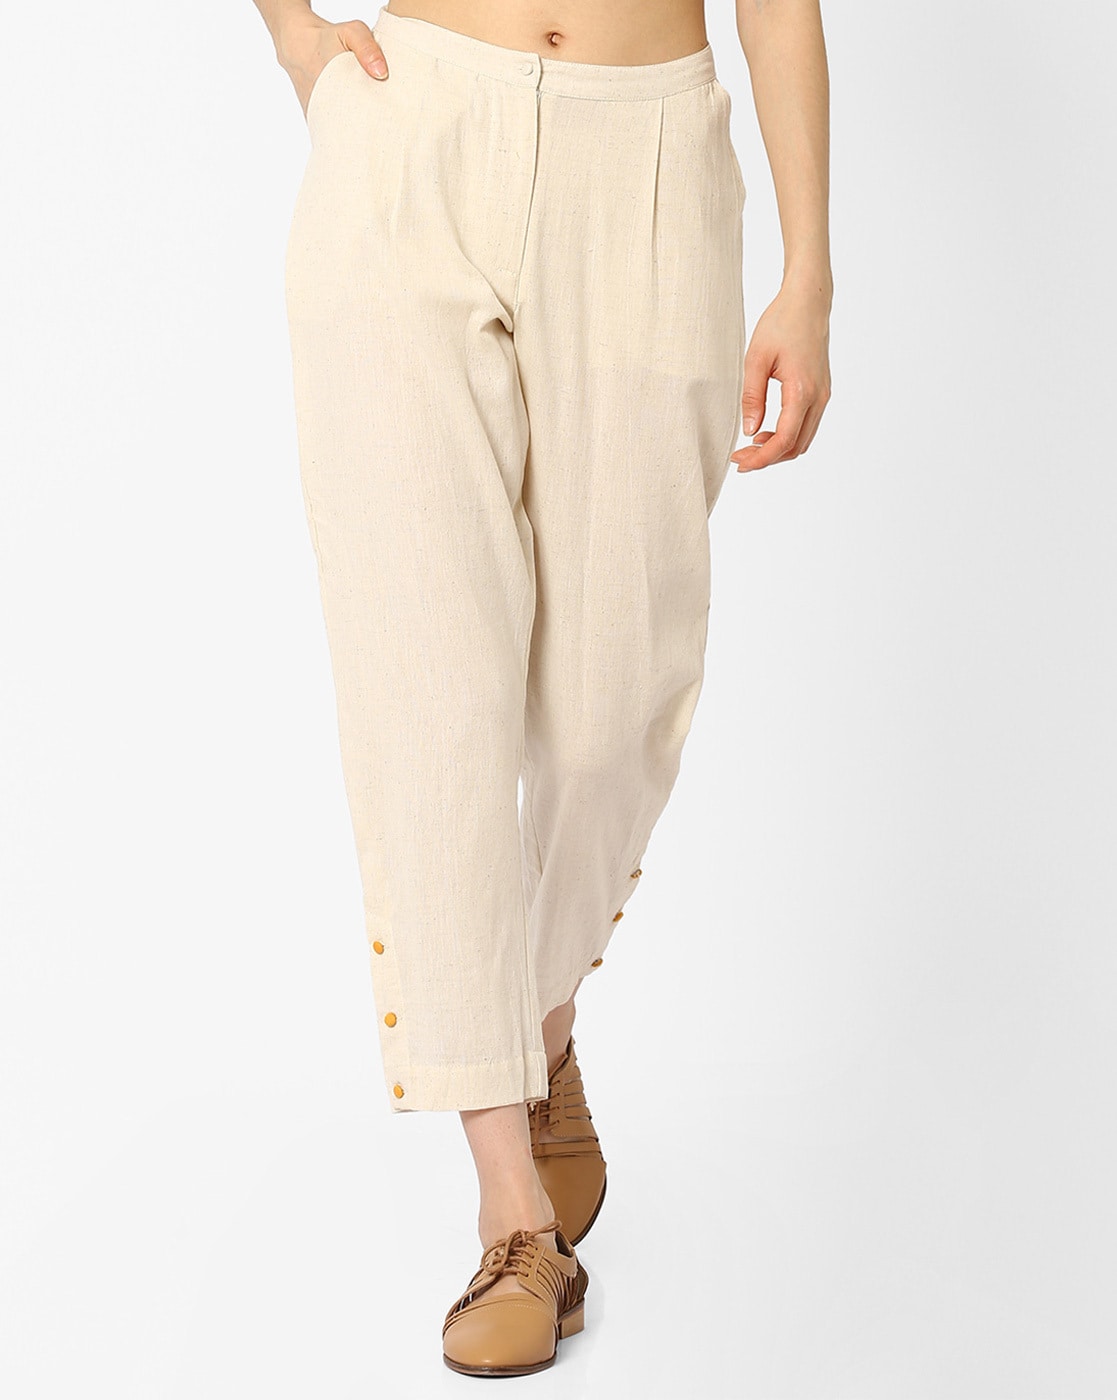 Pencil Pants Off White  Unimod Chic Fashion